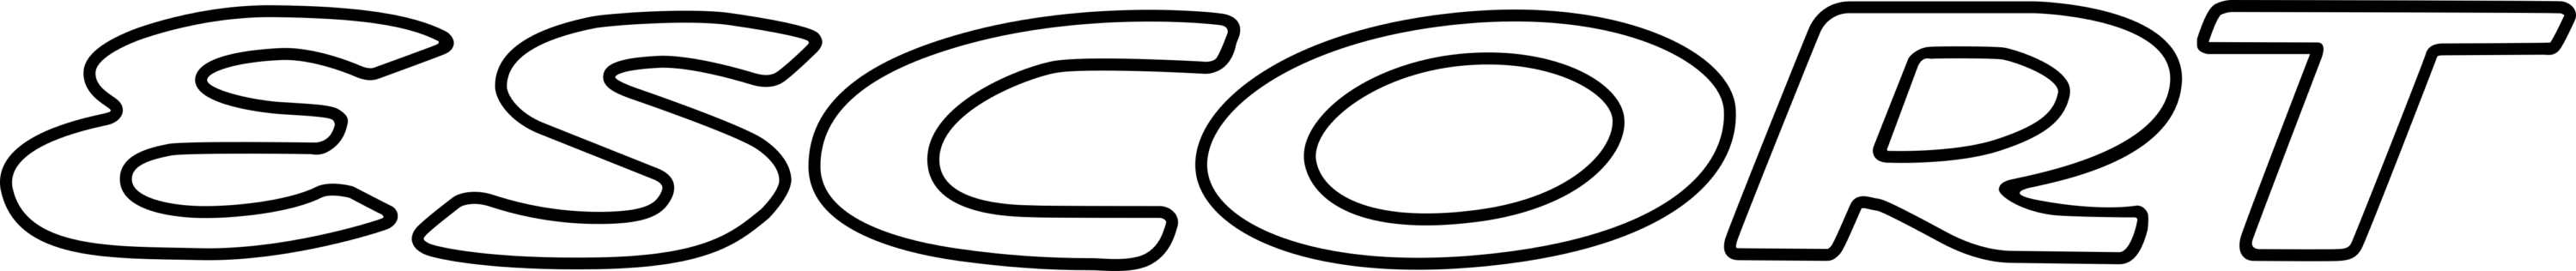 Ford Escort Logo